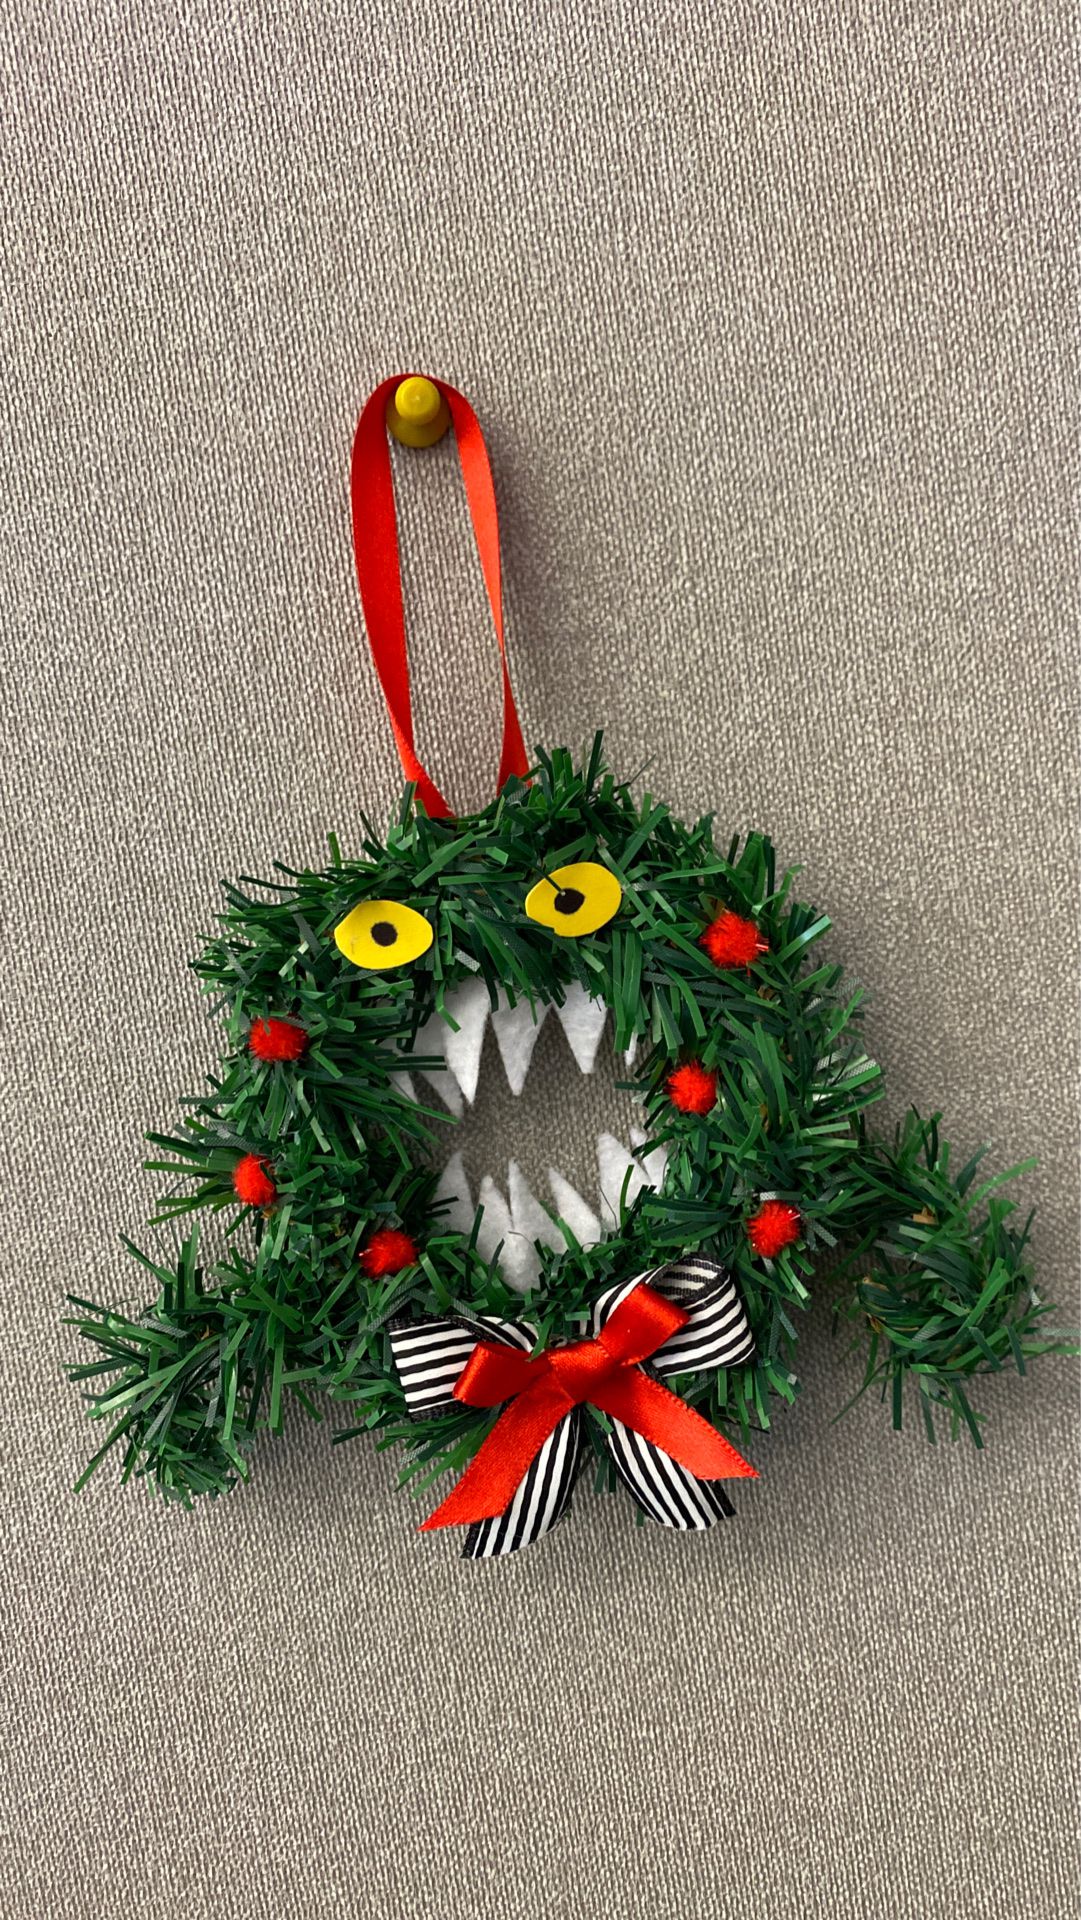 Nightmare before Christmas wreath ornament